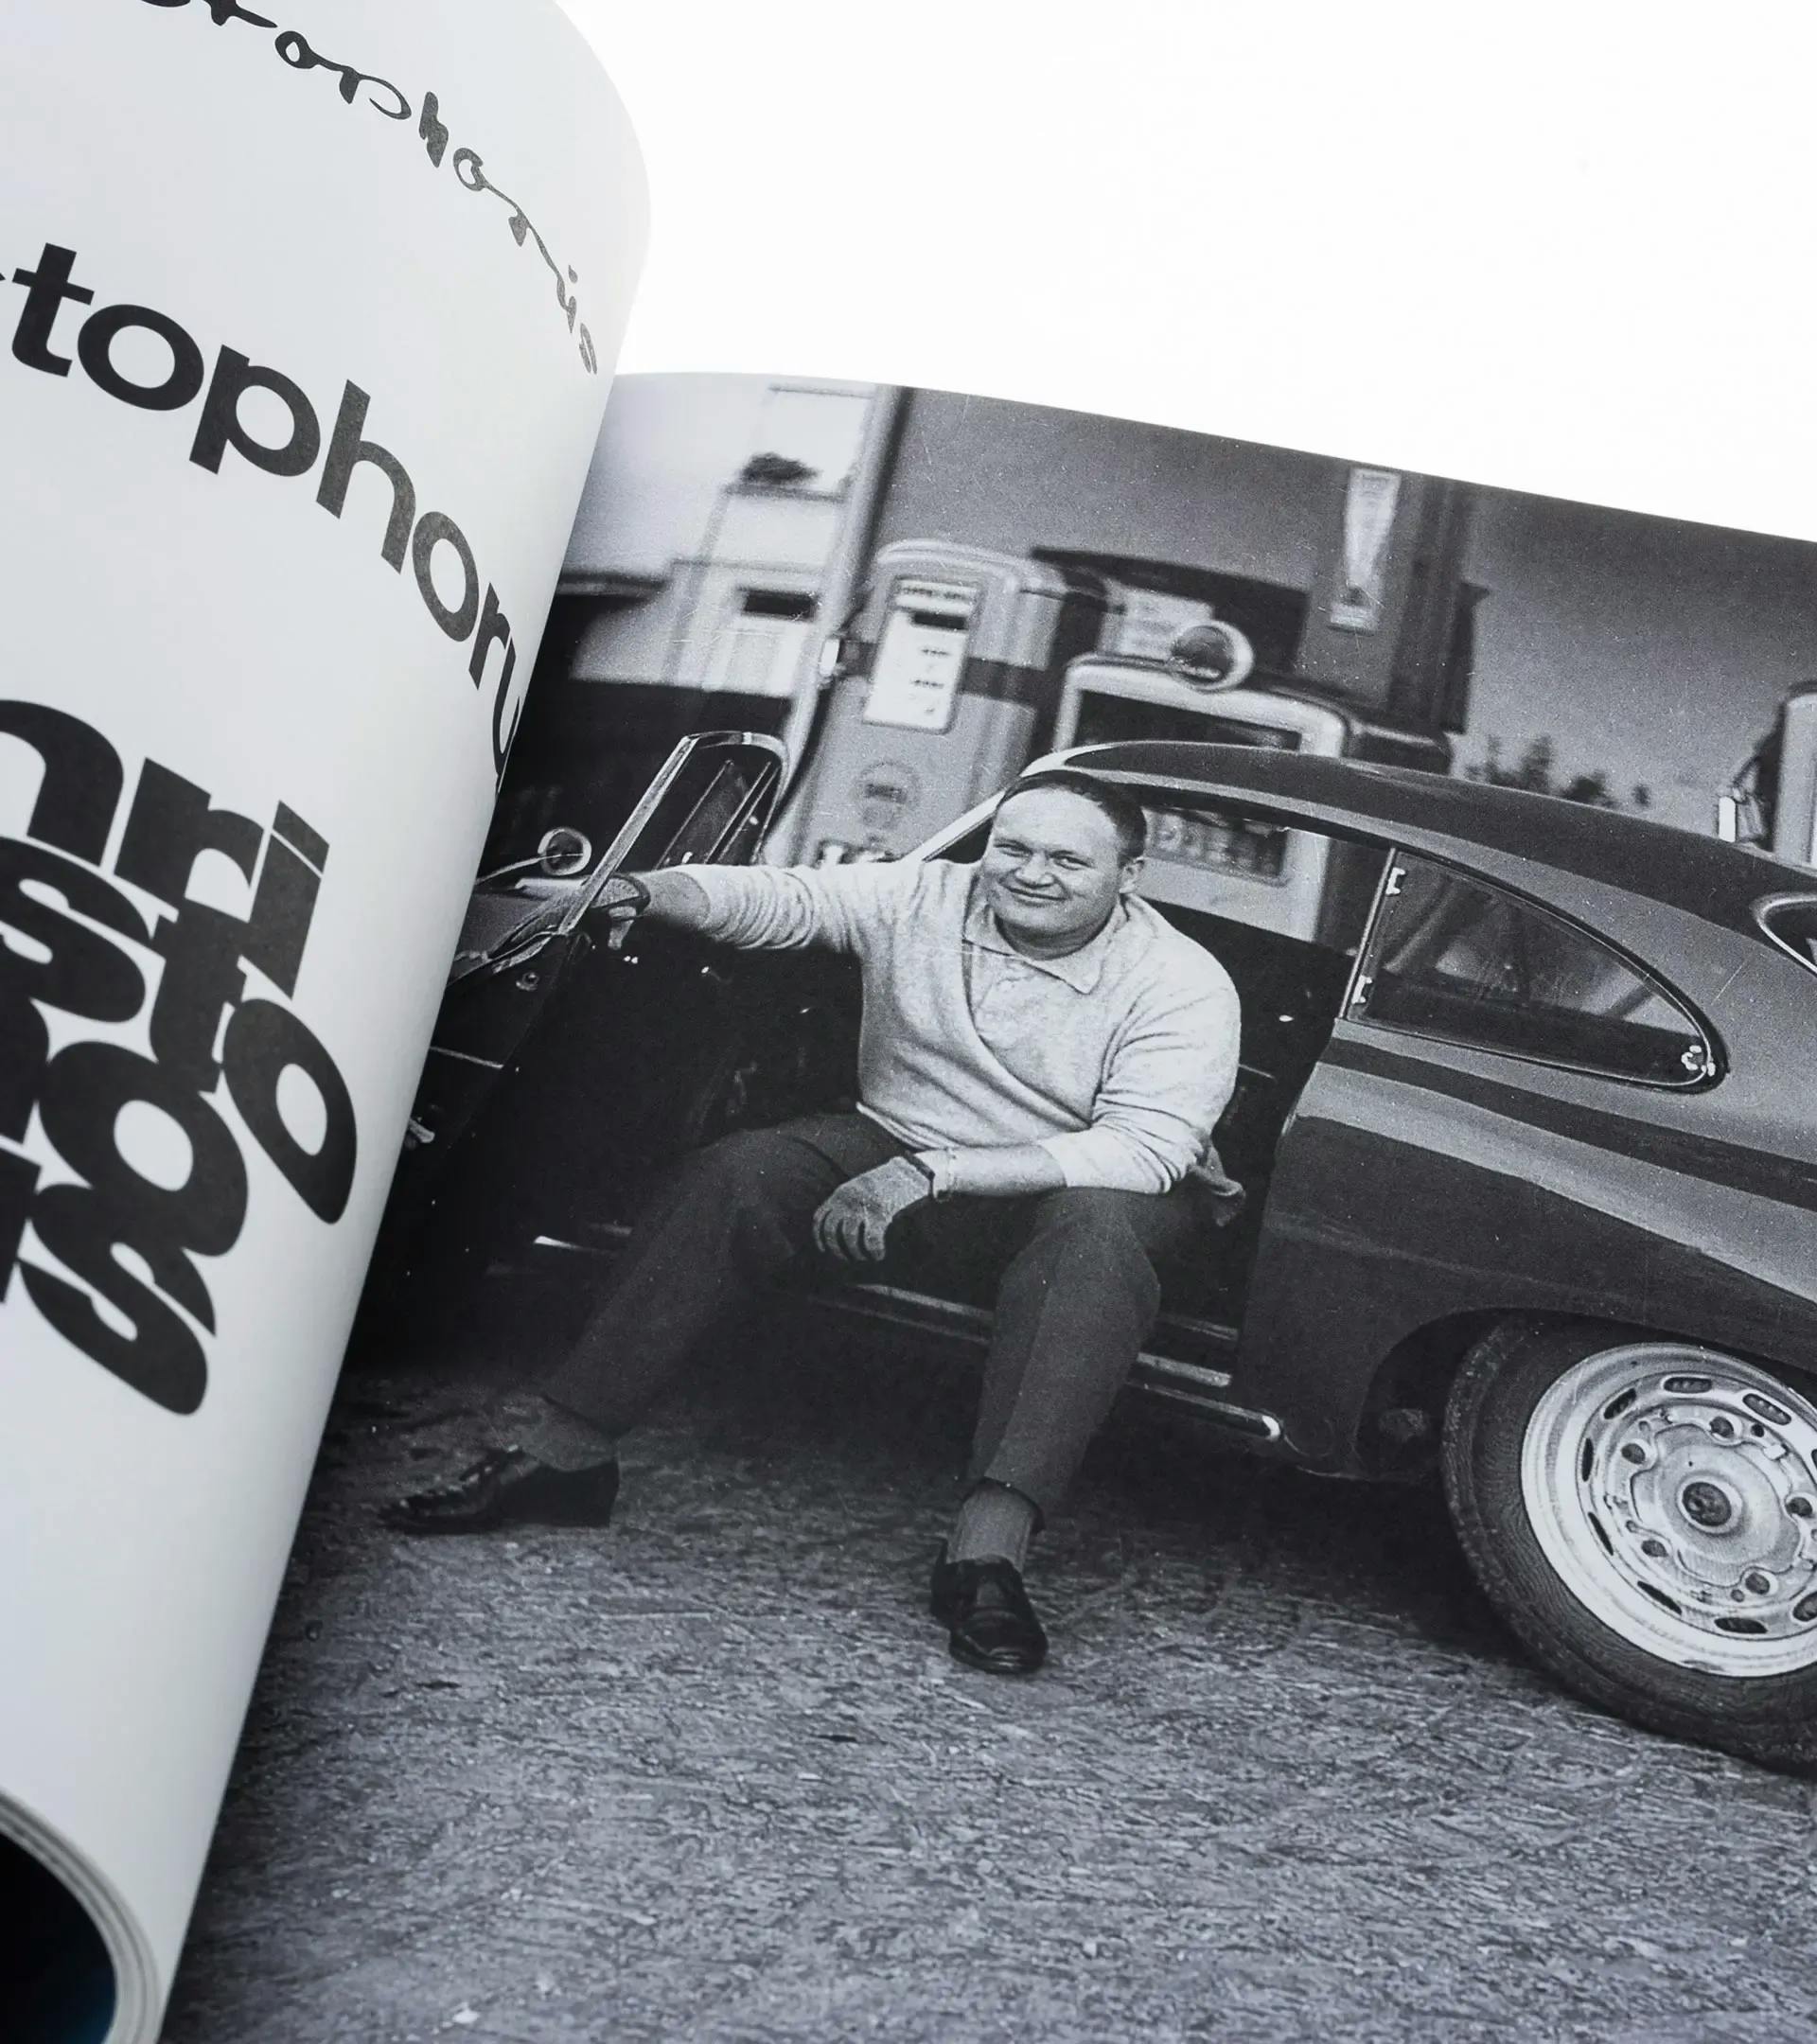 Buch E. Strenger und Porsche 2